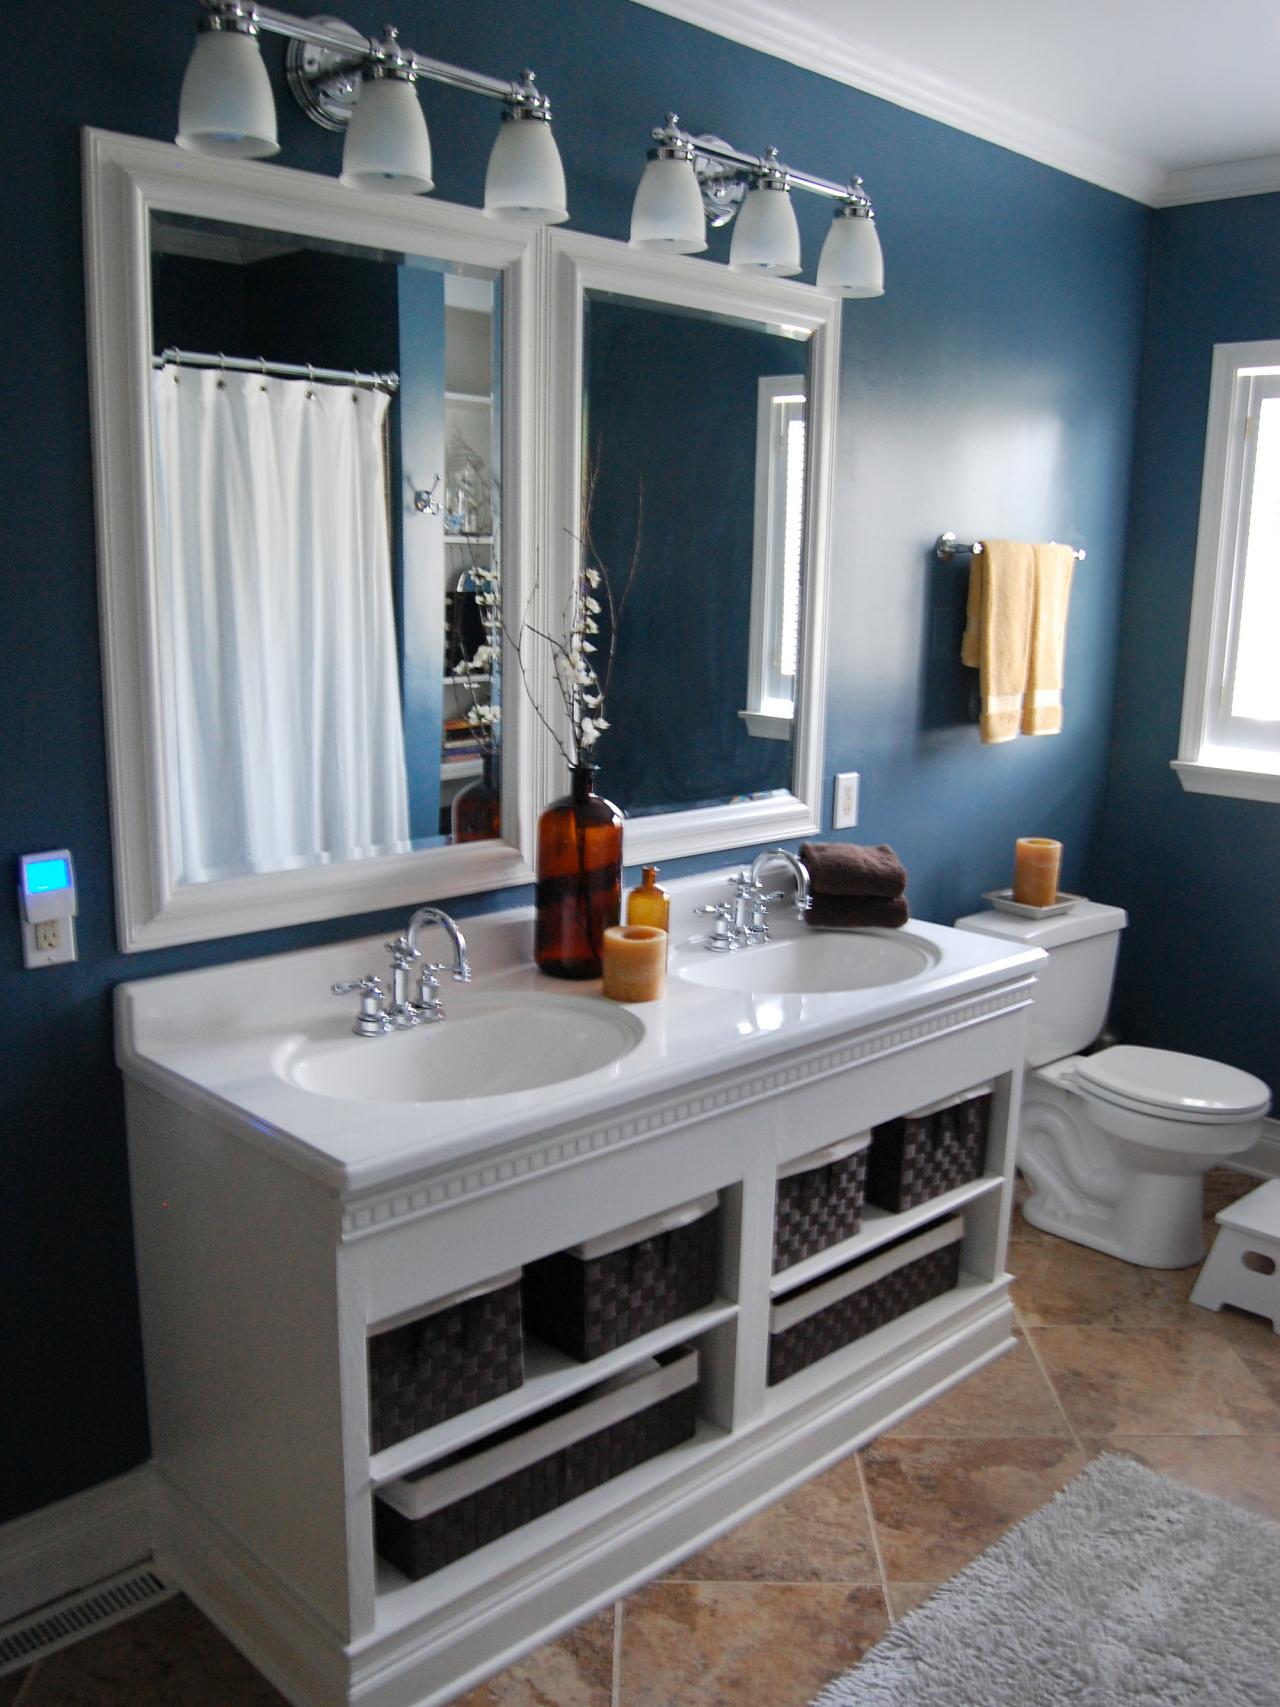 30+ Inexpensive Bathroom Renovation Ideas - Interior ...